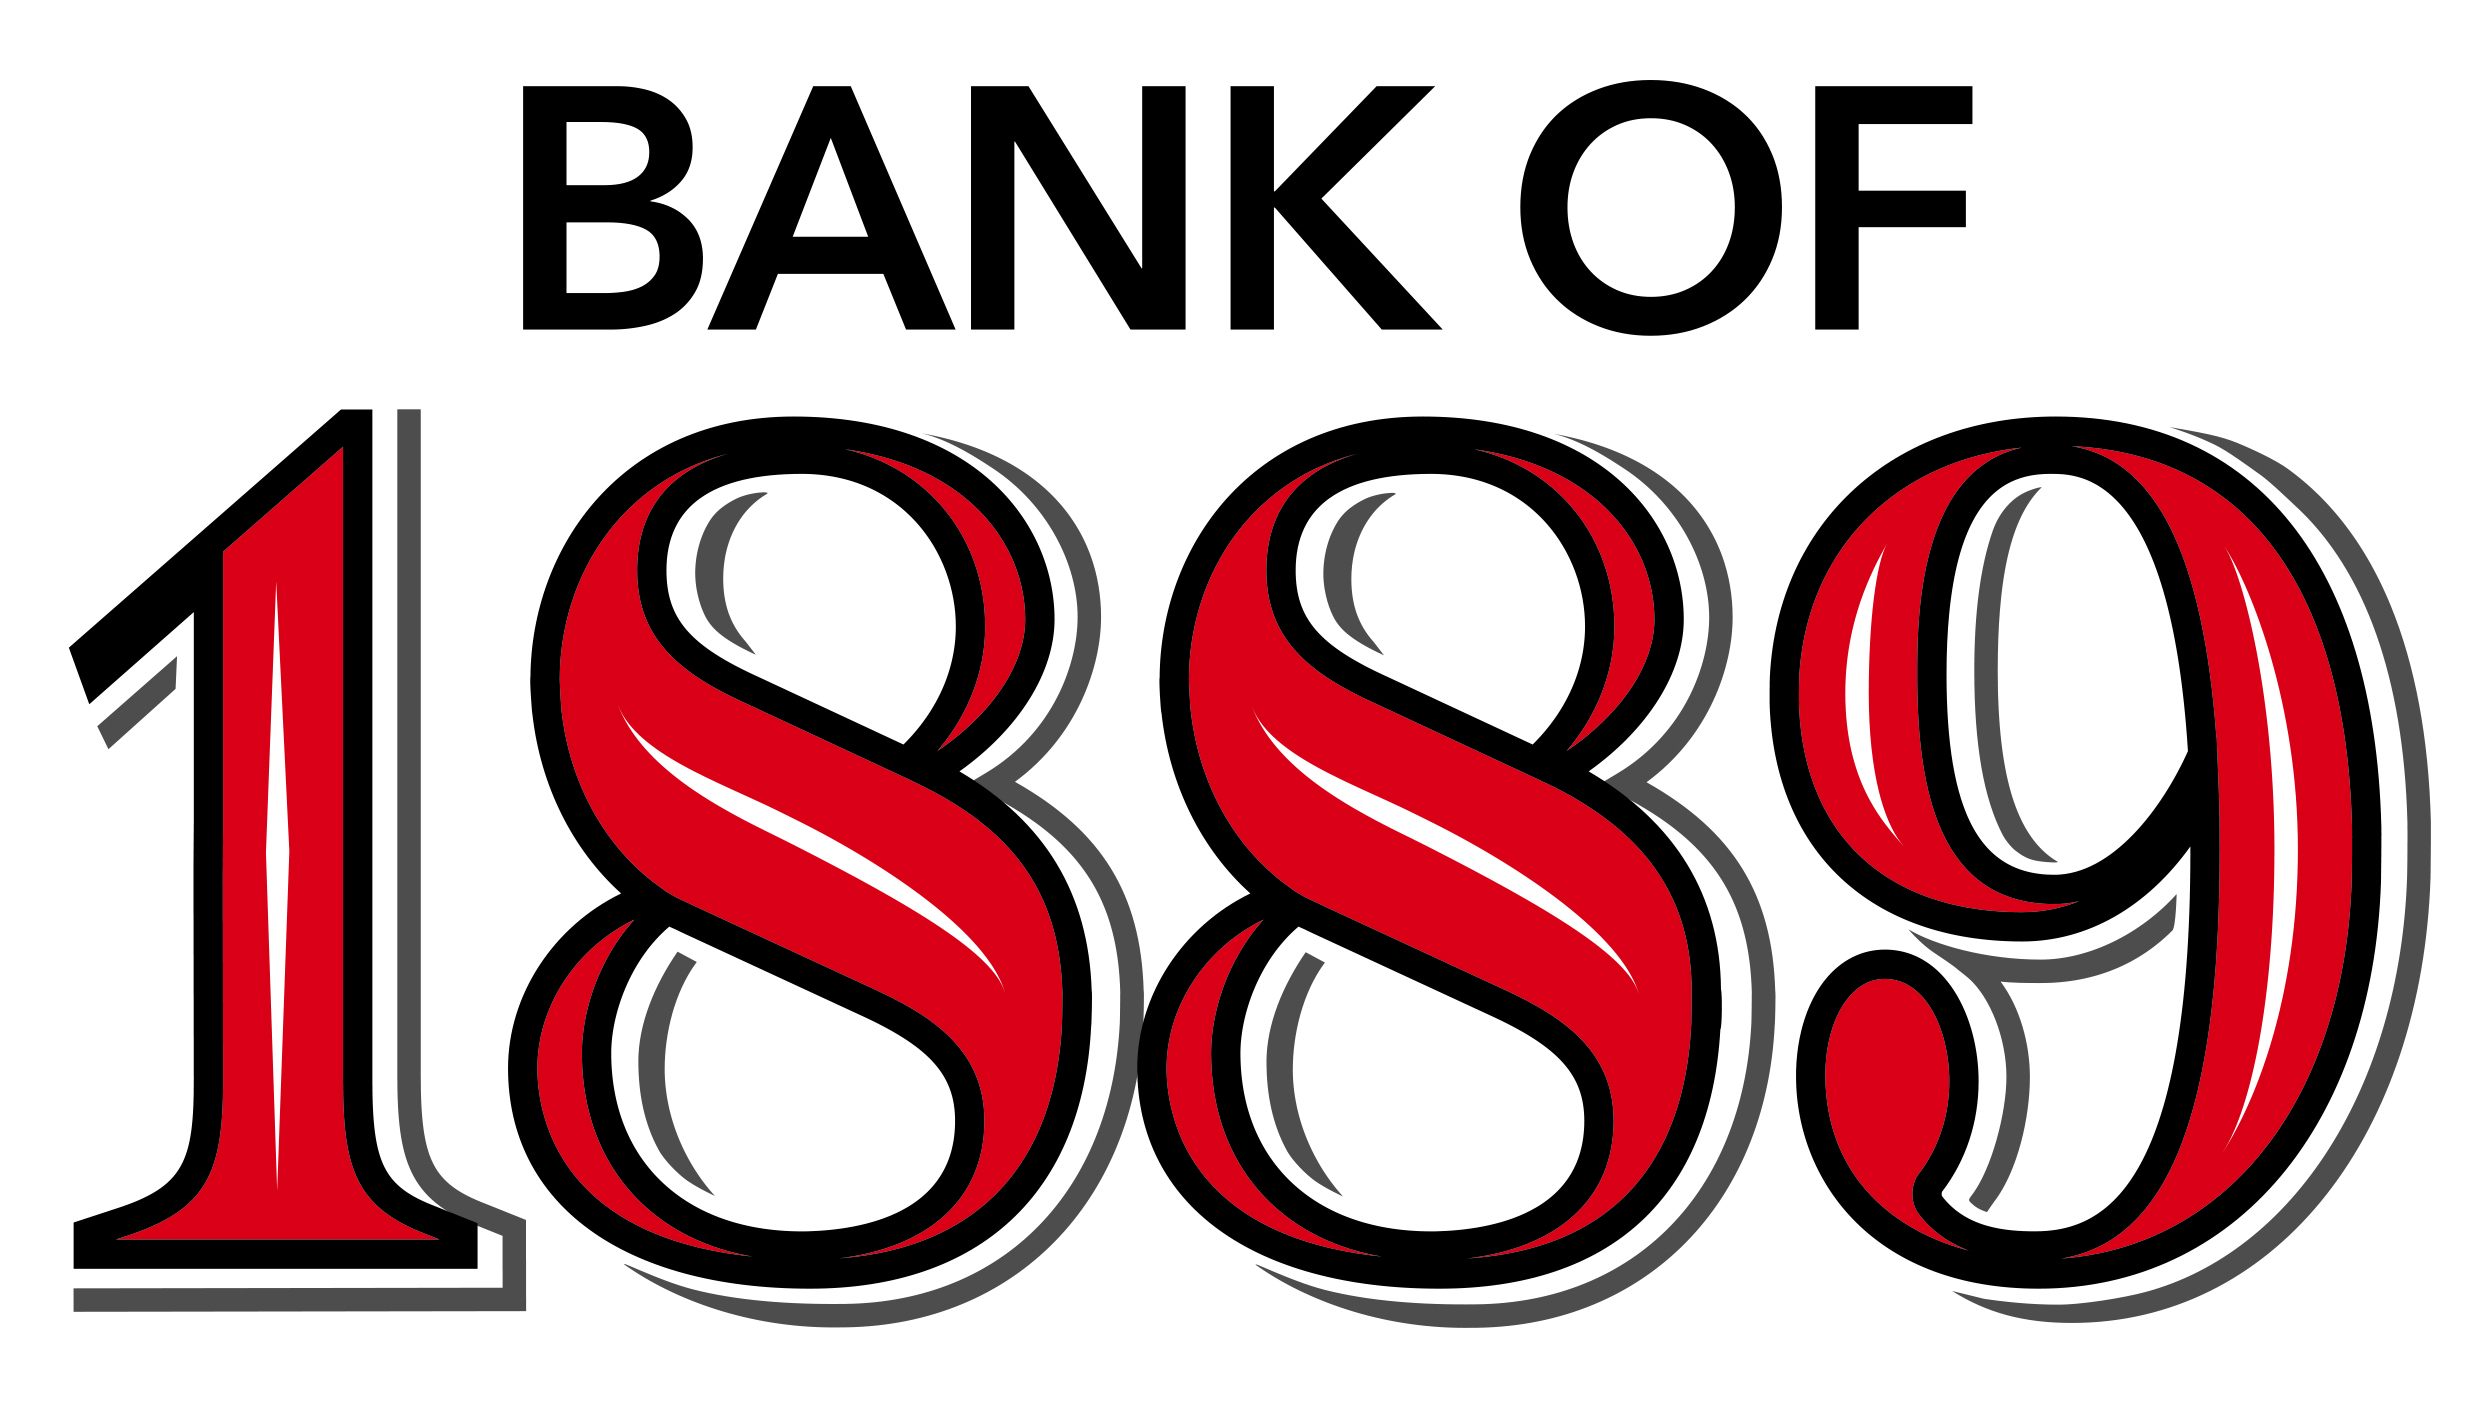 Bank of 1889